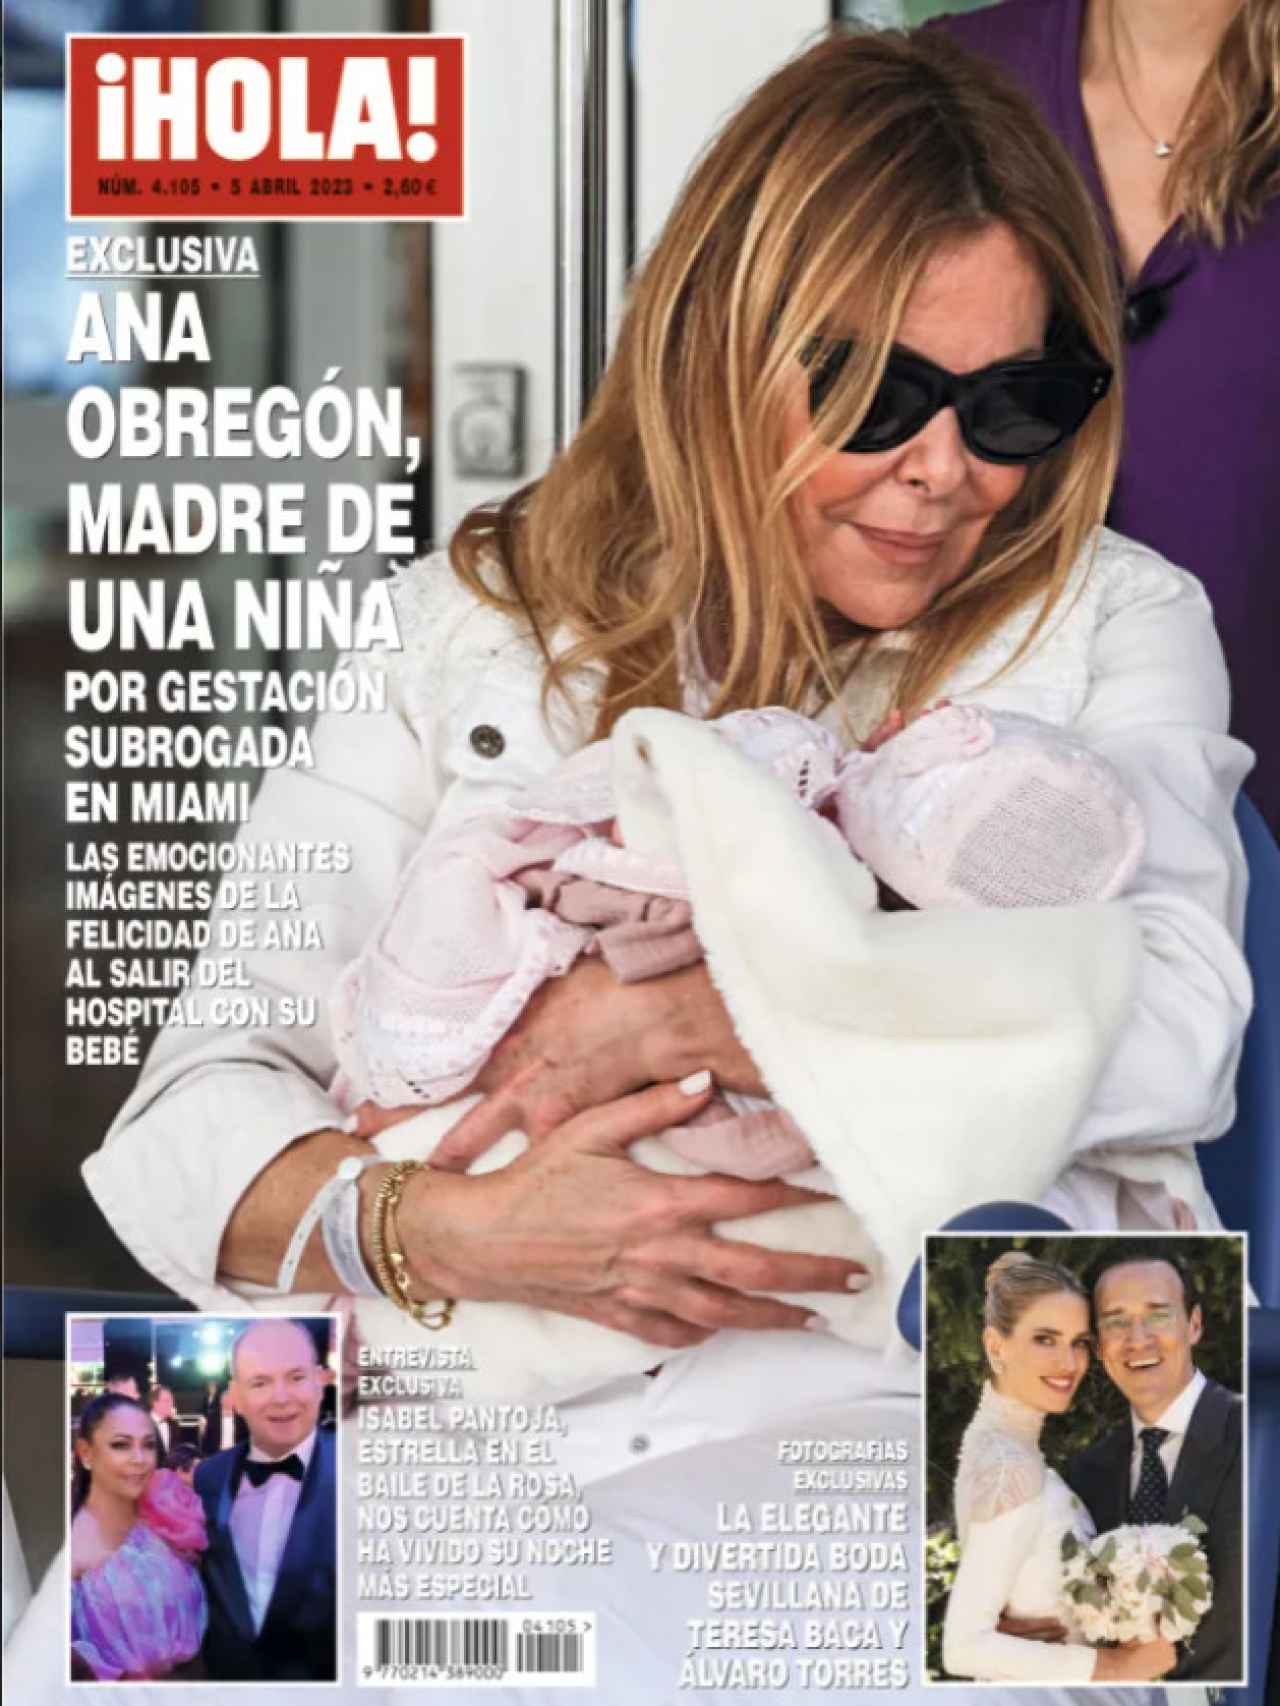 La portada de la revista '¡HOLA!' con la maternidad de Ana Obregón.